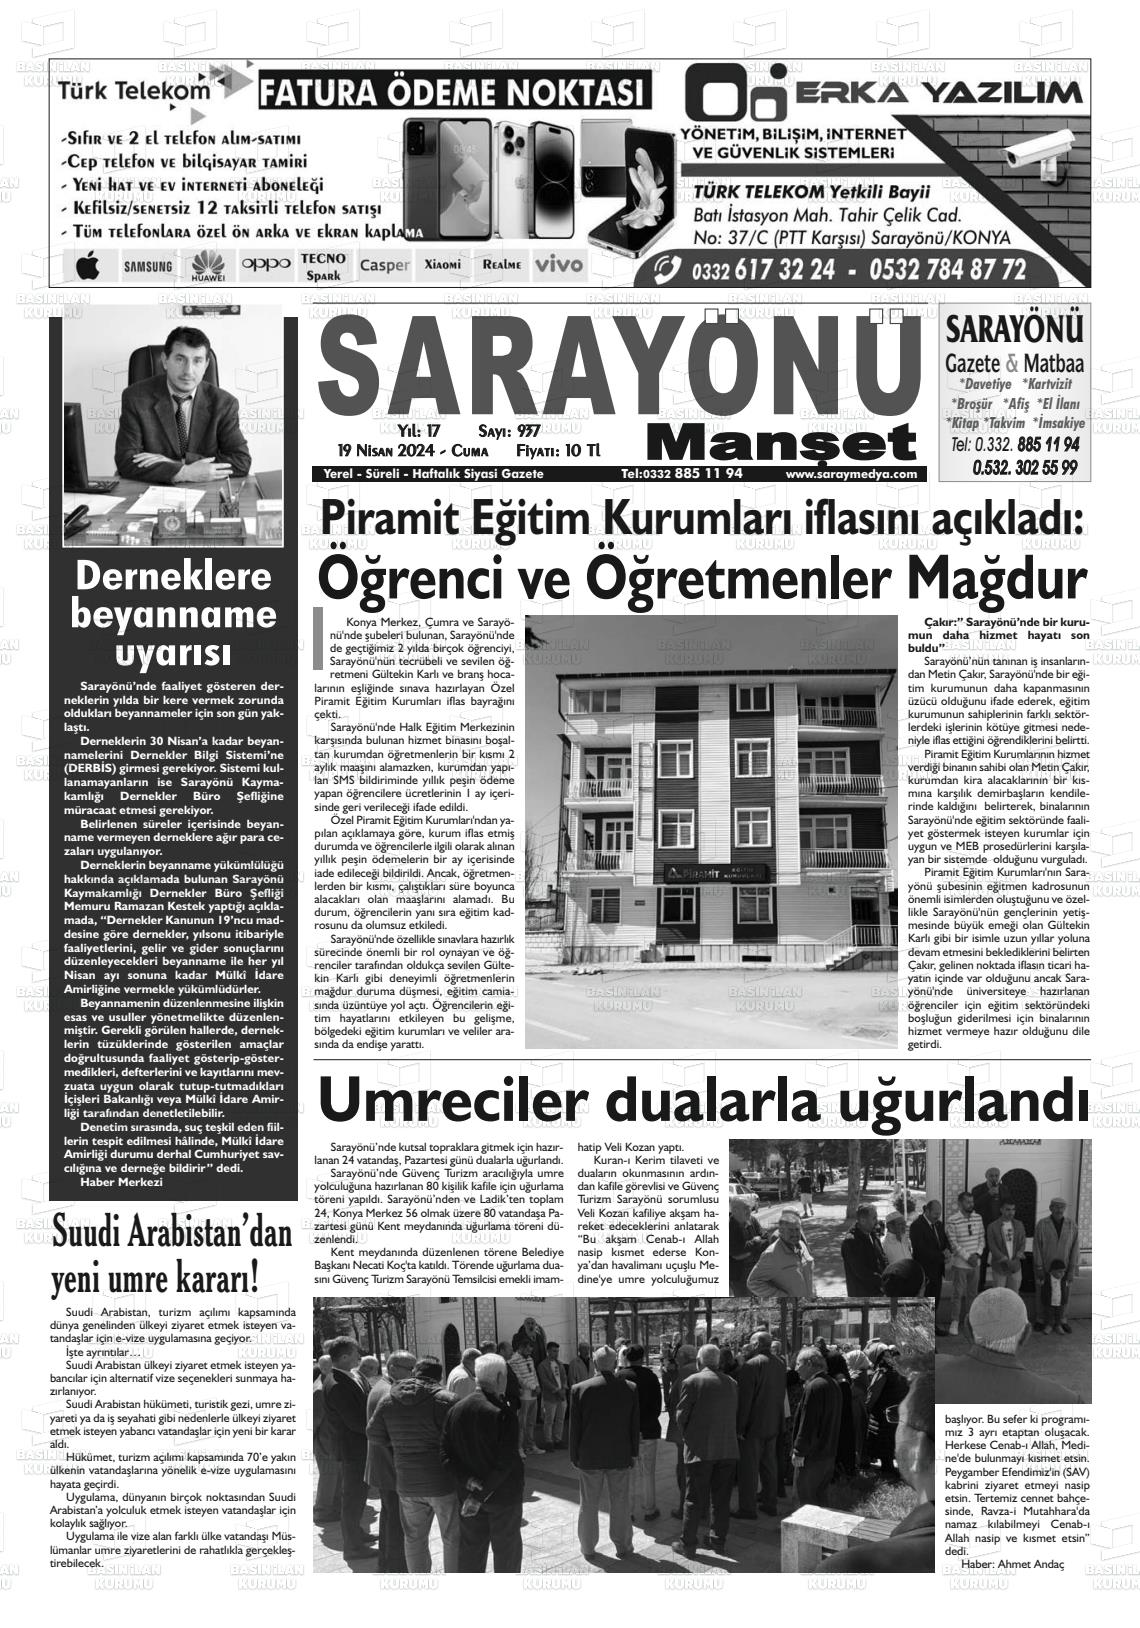 19 Nisan 2024 Saray Medya Gazete Manşeti